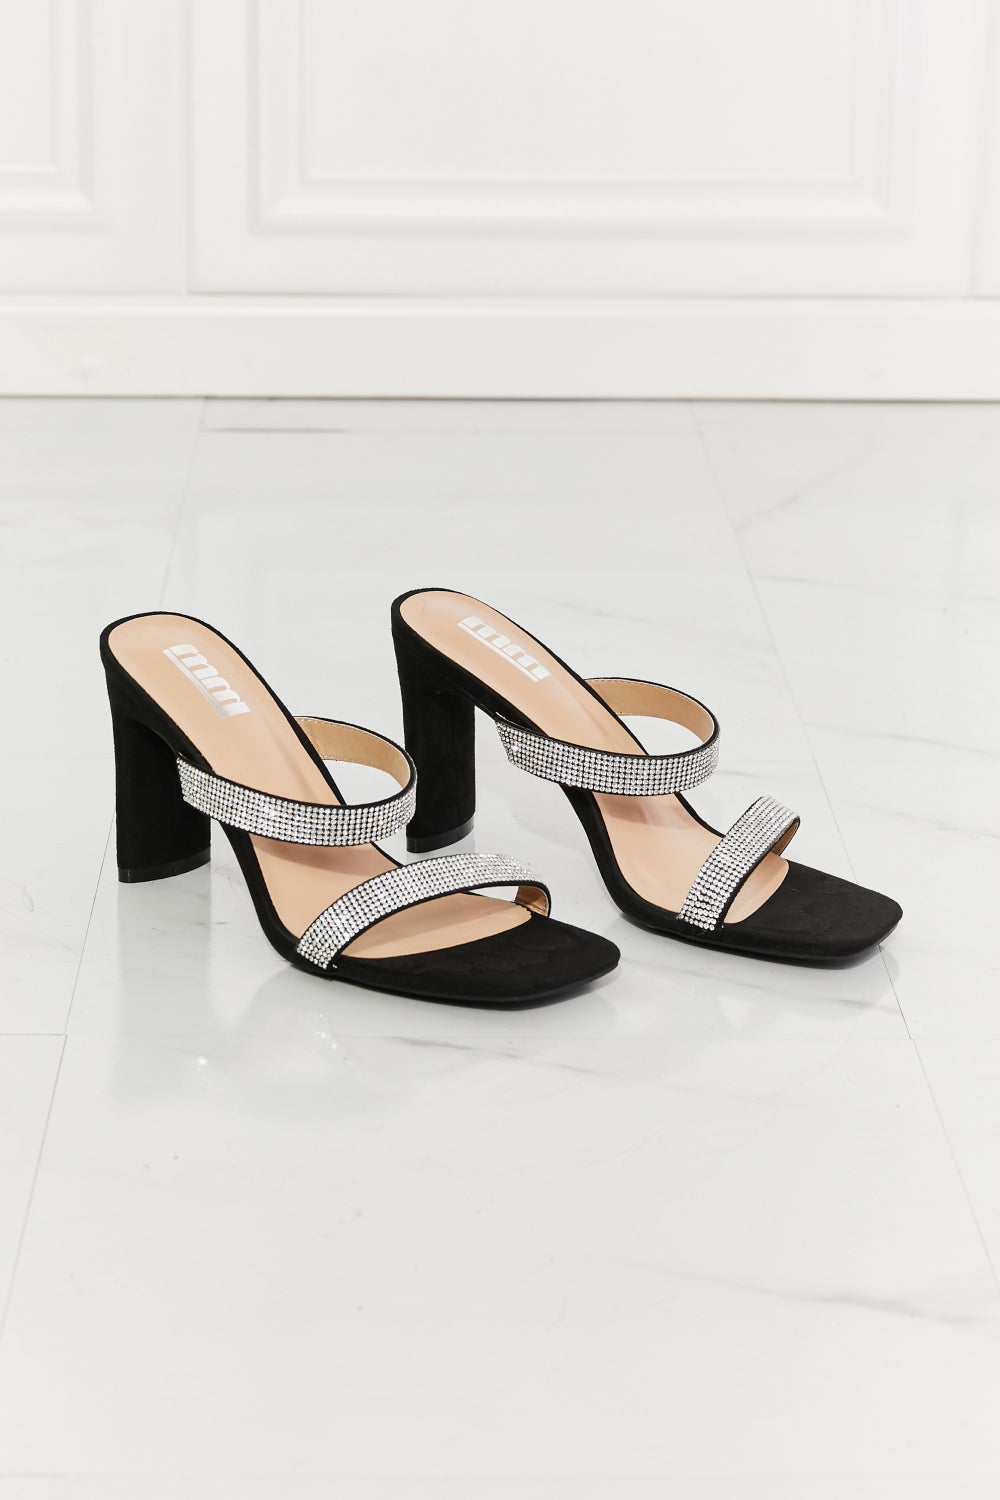 MMShoes Leave A Little Sparkle Rhinestone Block Heel Sandal in Black - nailedmoms